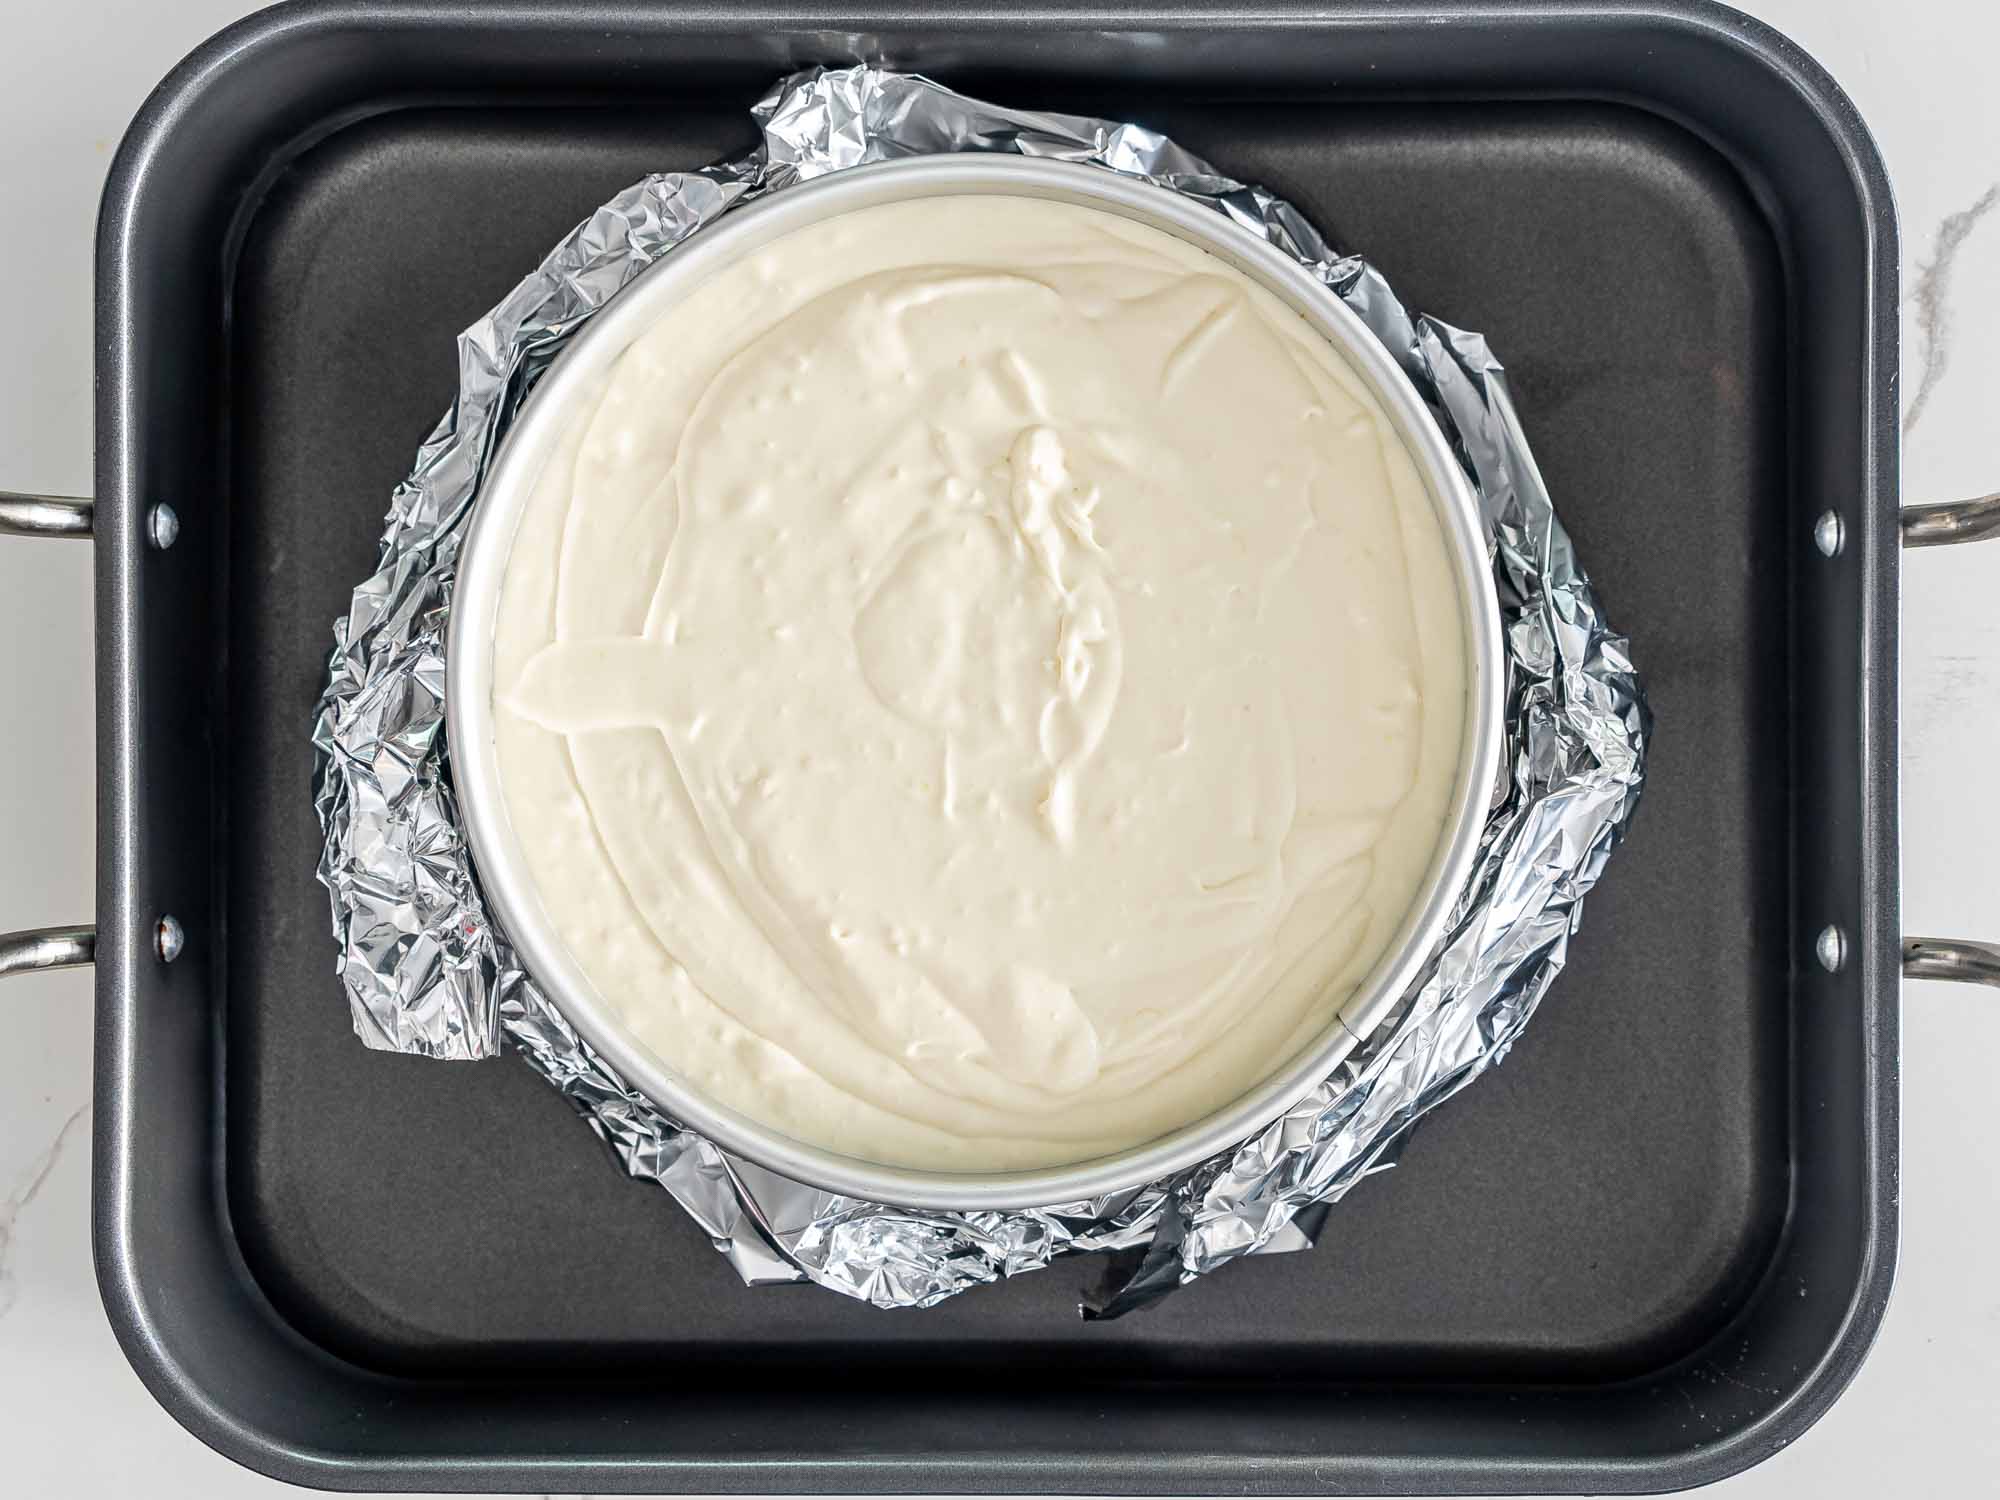 process shots showing how to make lemon cheesecake.